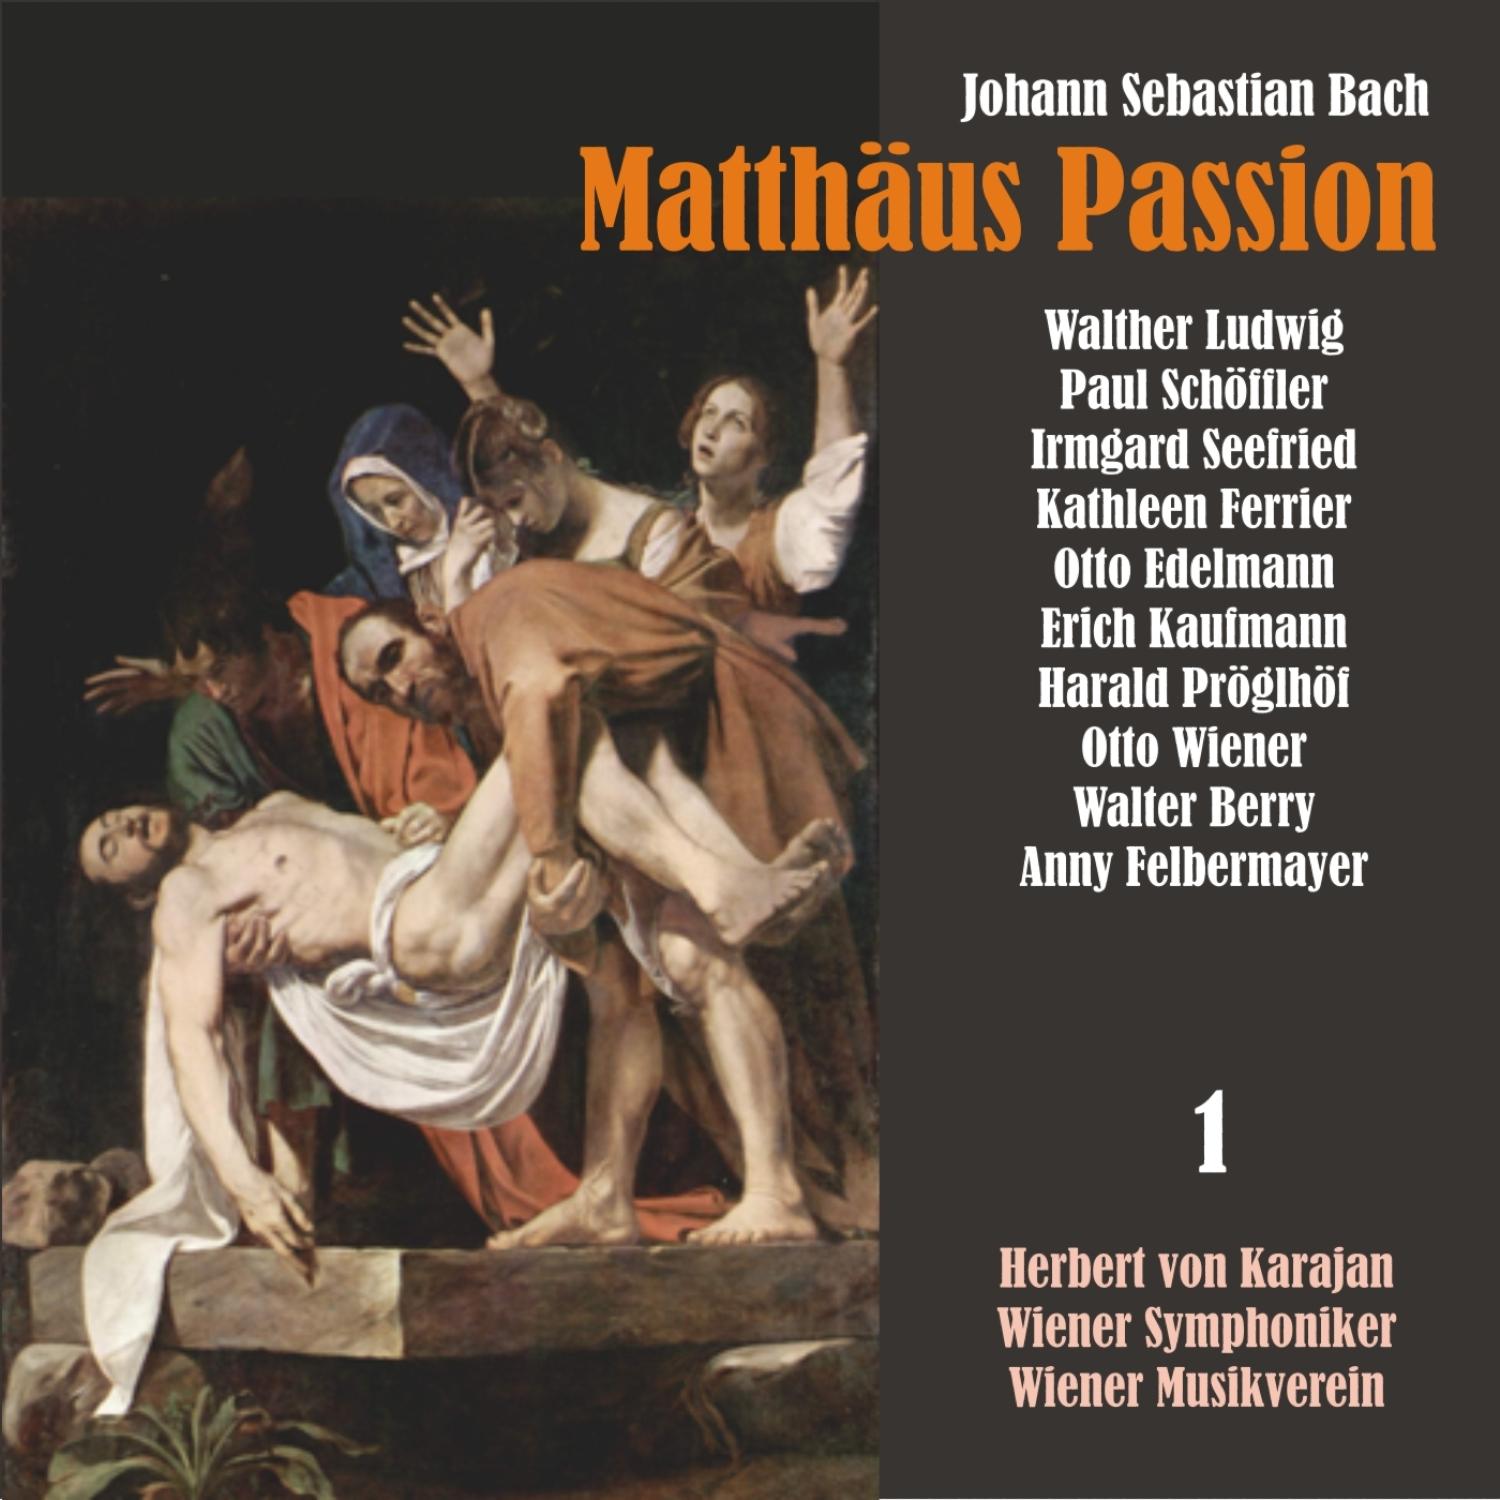 Matthäus Passion, BWV 244: "Du lieber Heiland du"